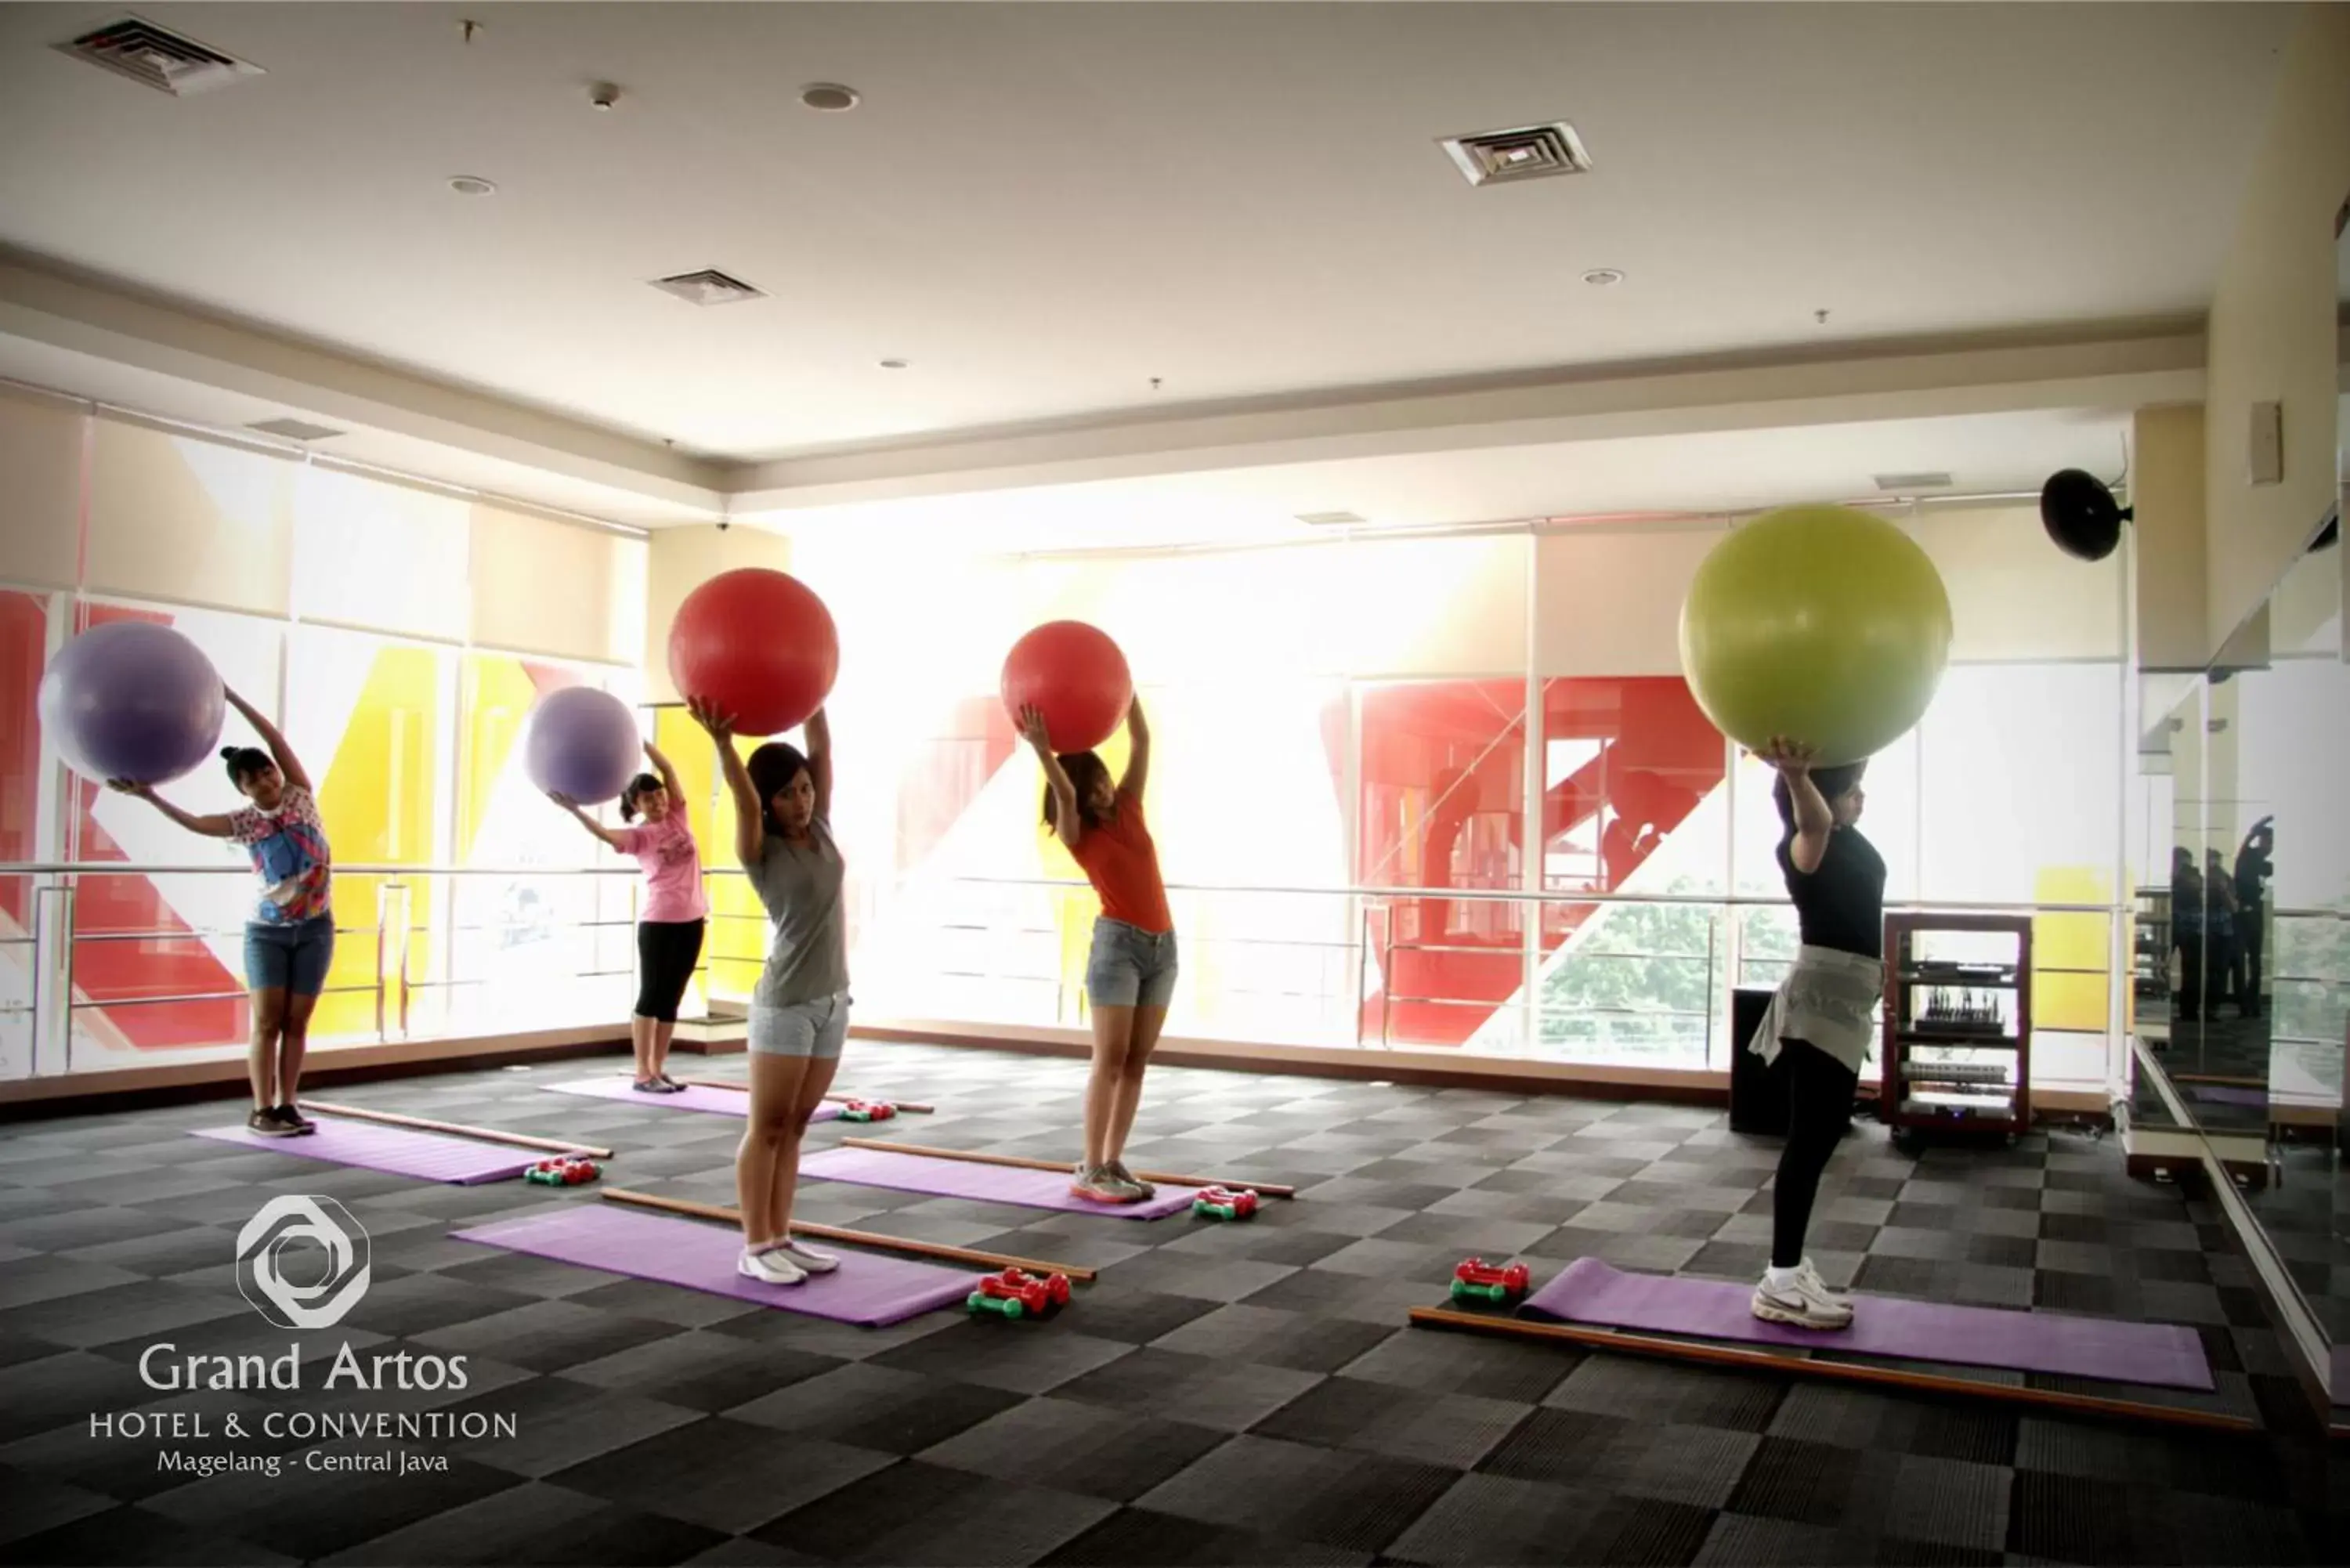 Activities, Fitness Center/Facilities in Grand Artos Hotel & Convention